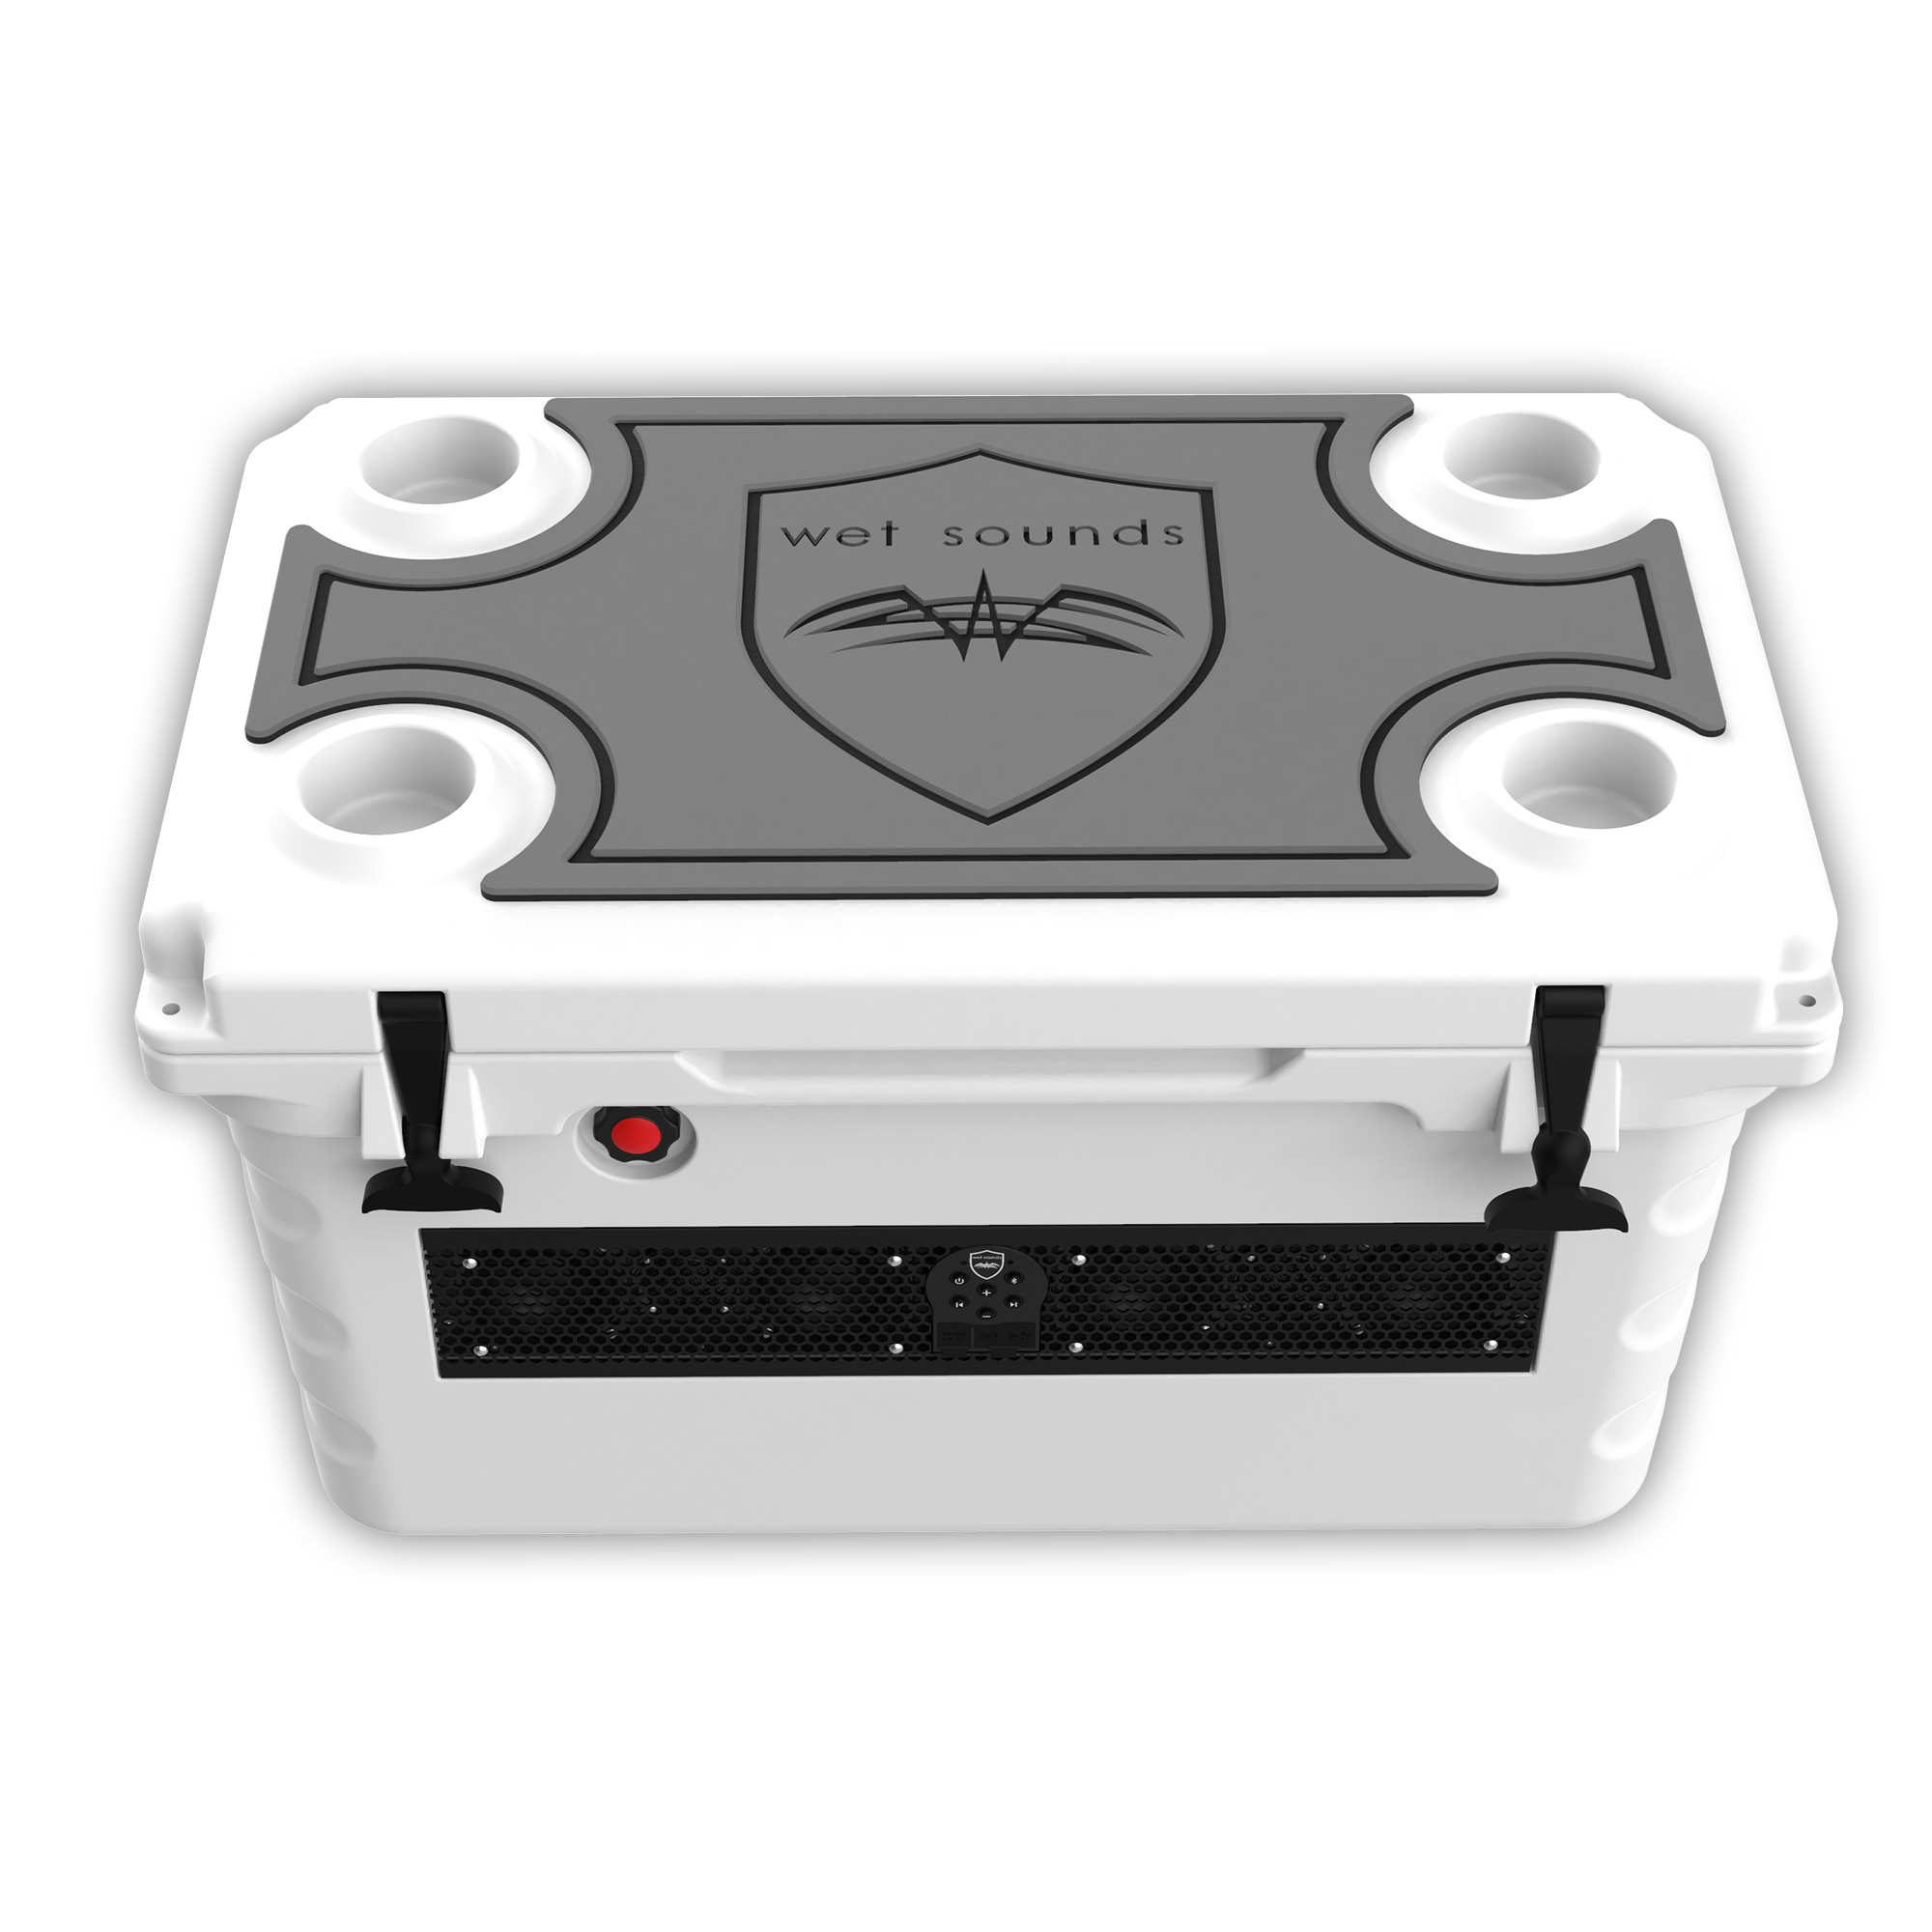 Wet Sounds Stealth SHIVR-55-WHT White High Output Audio Cooler Speaker  System Top Gator Step Kit Gray Over Black